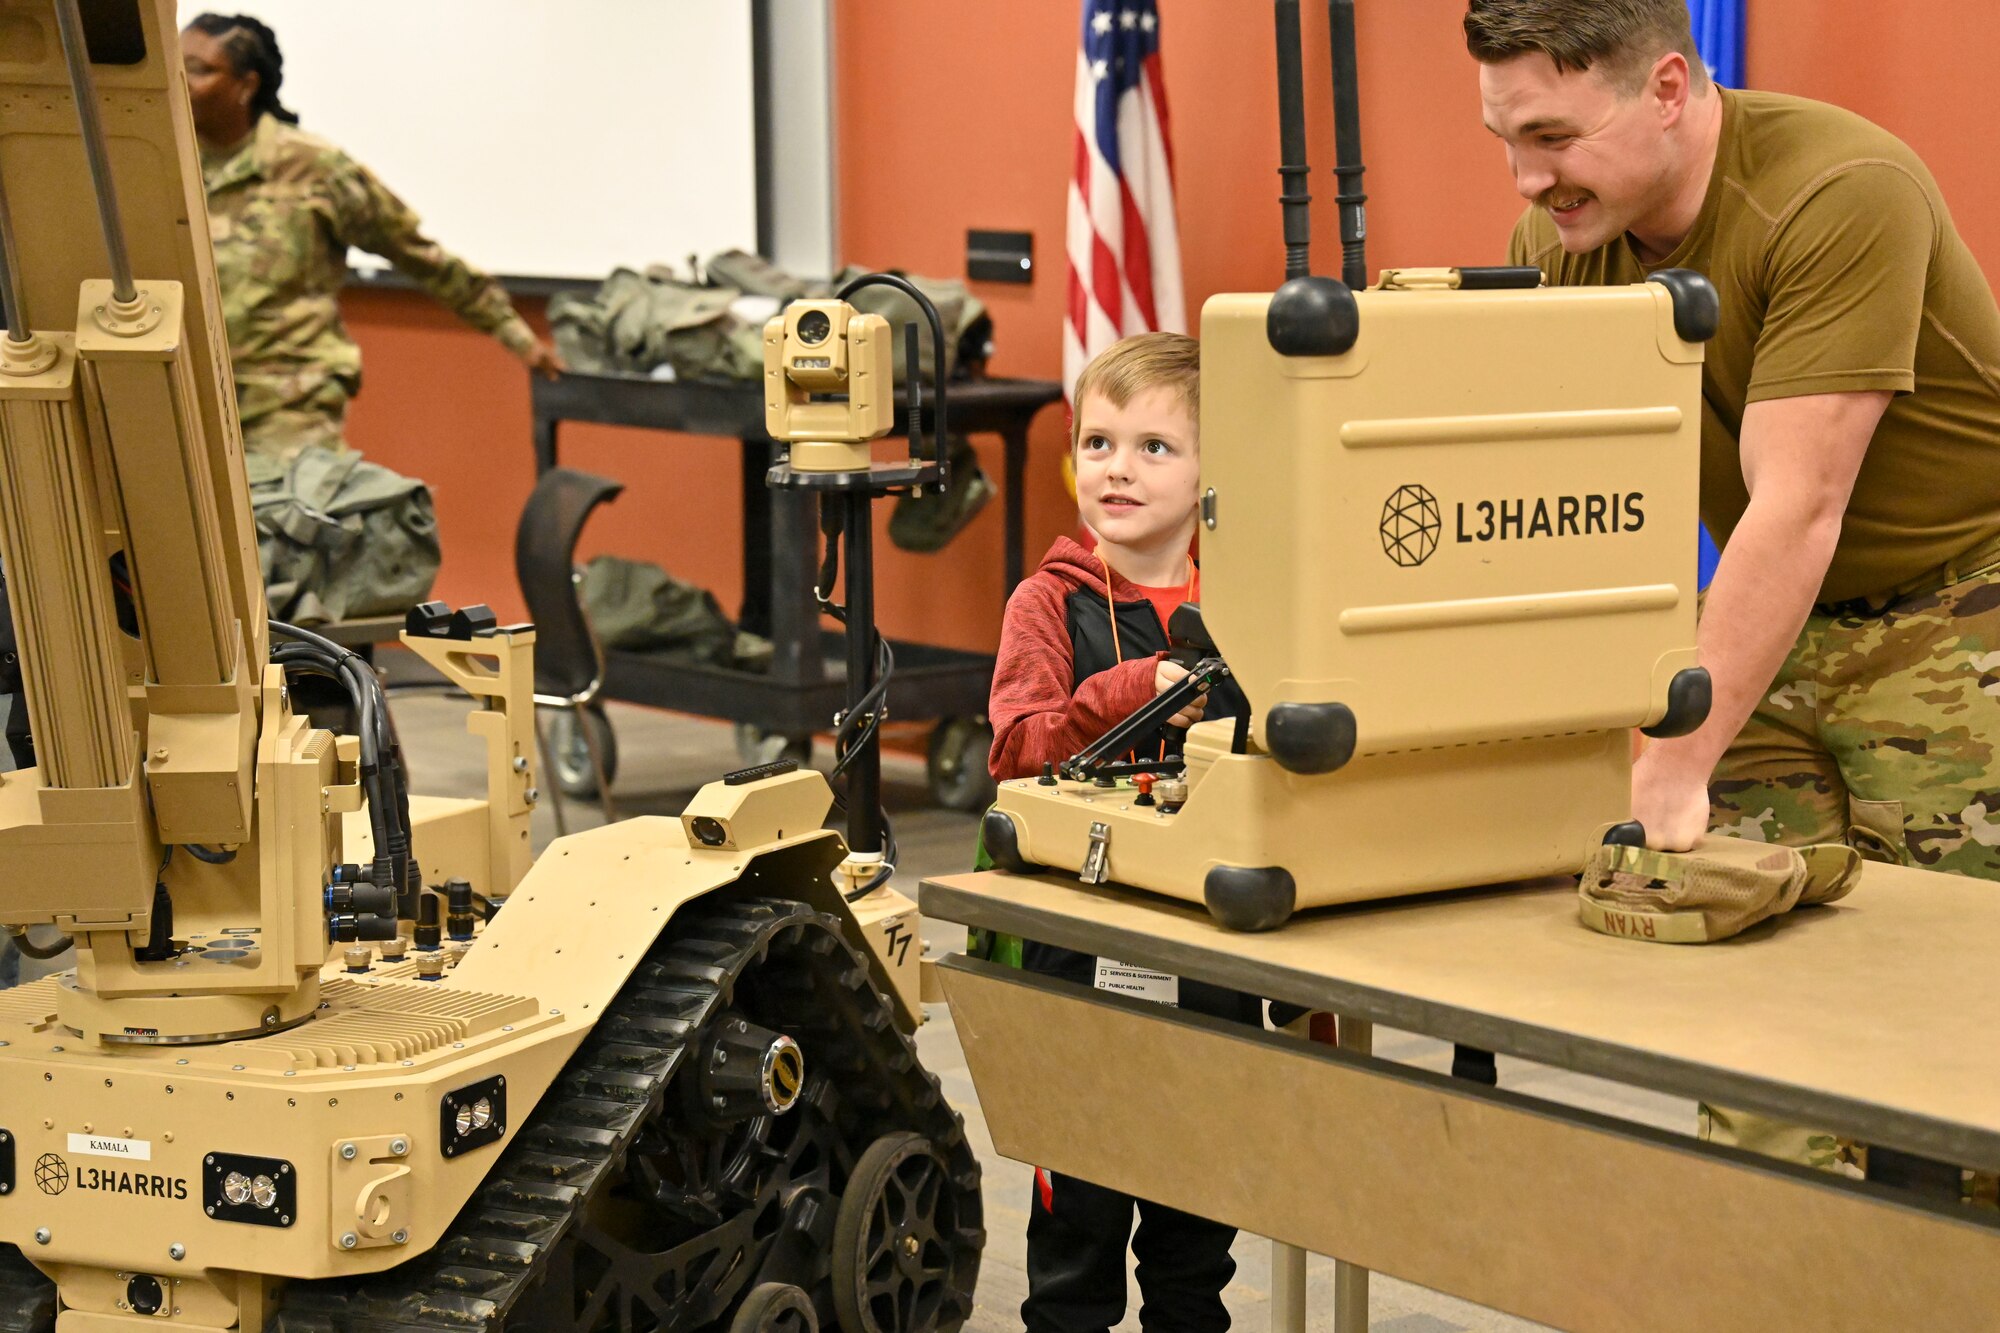 Kid's Deployment Line celebrates Ellsworth's military children